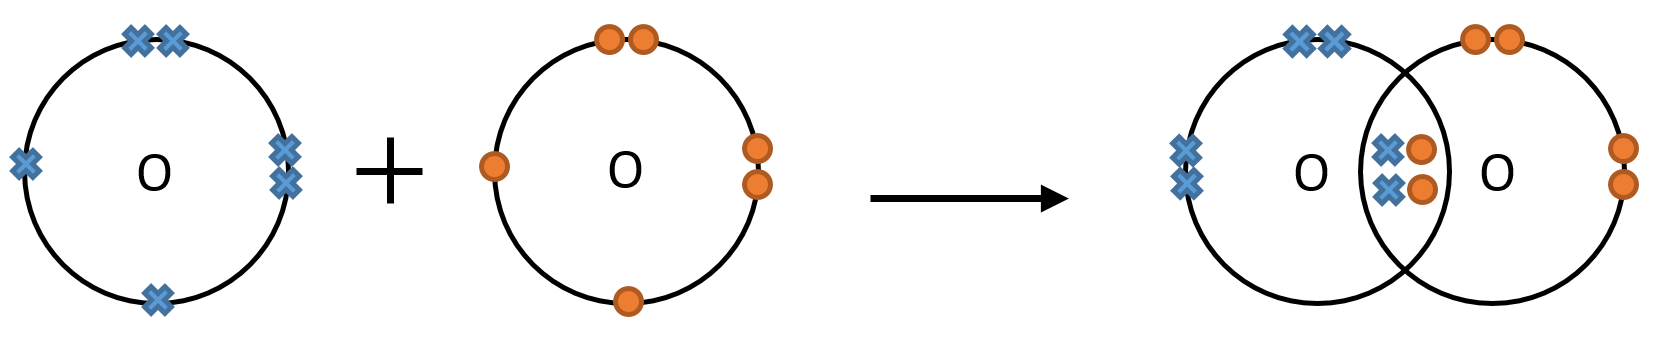 Oxygen Covalent Bonding